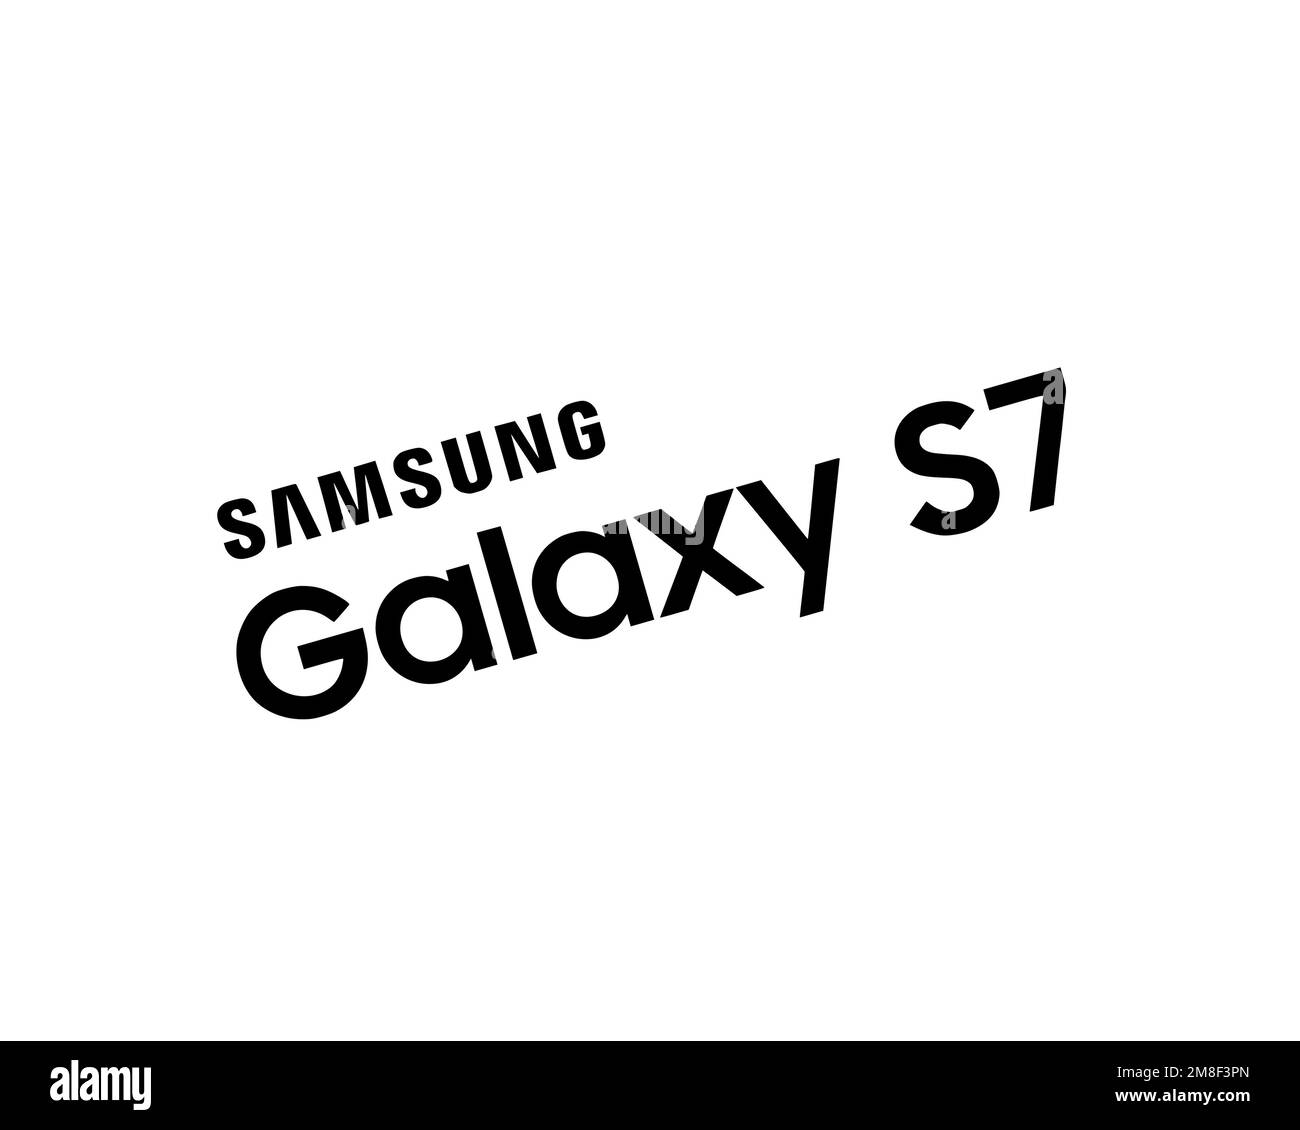 Samsung Galaxy S7, rotated logo, white background Stock Photo